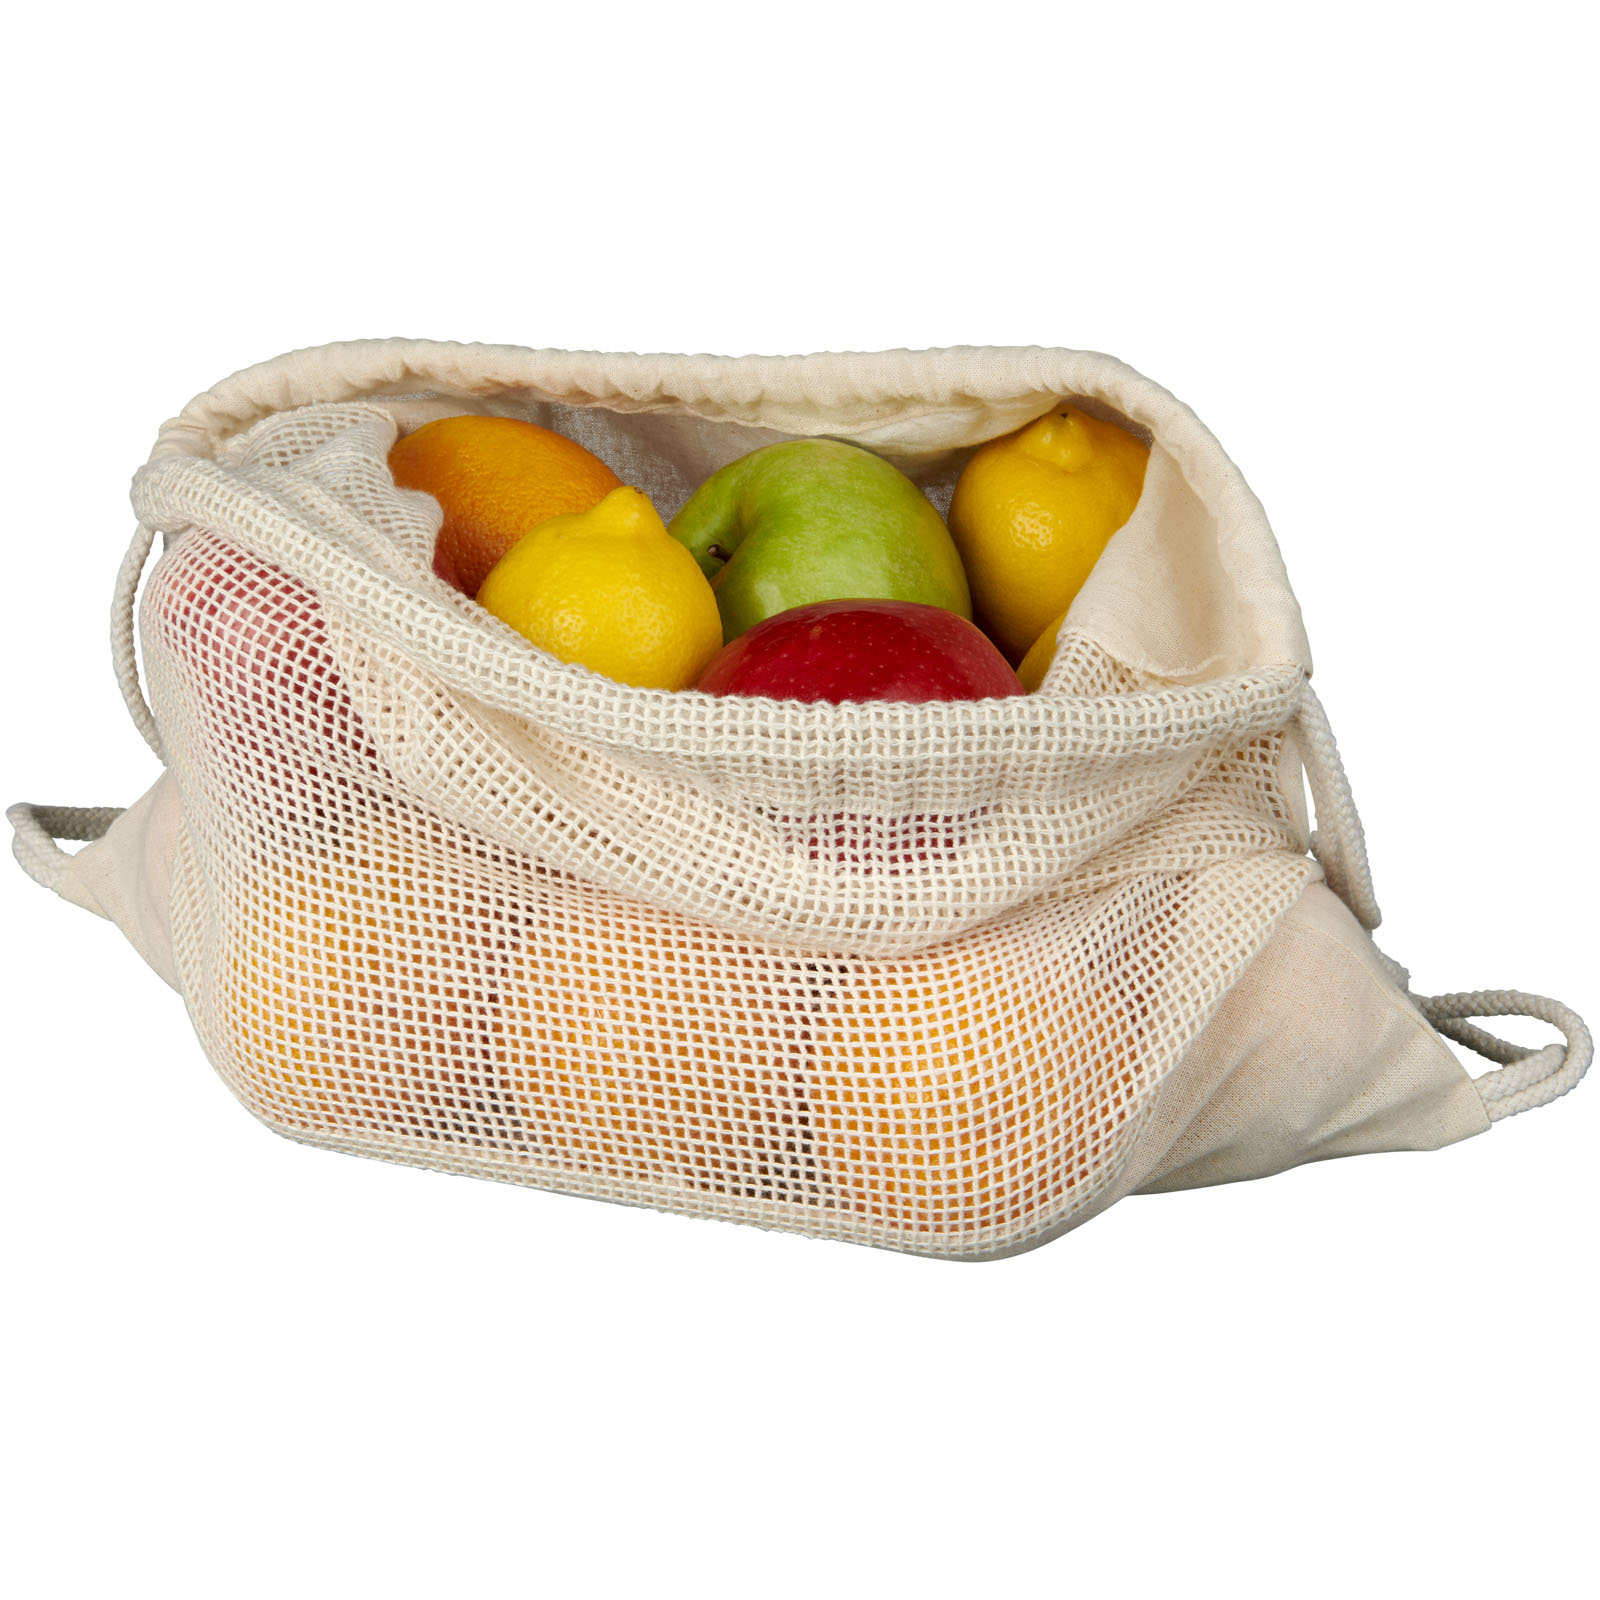 Advertising Drawstring Bags - Maine mesh cotton drawstring bag 5L - 3